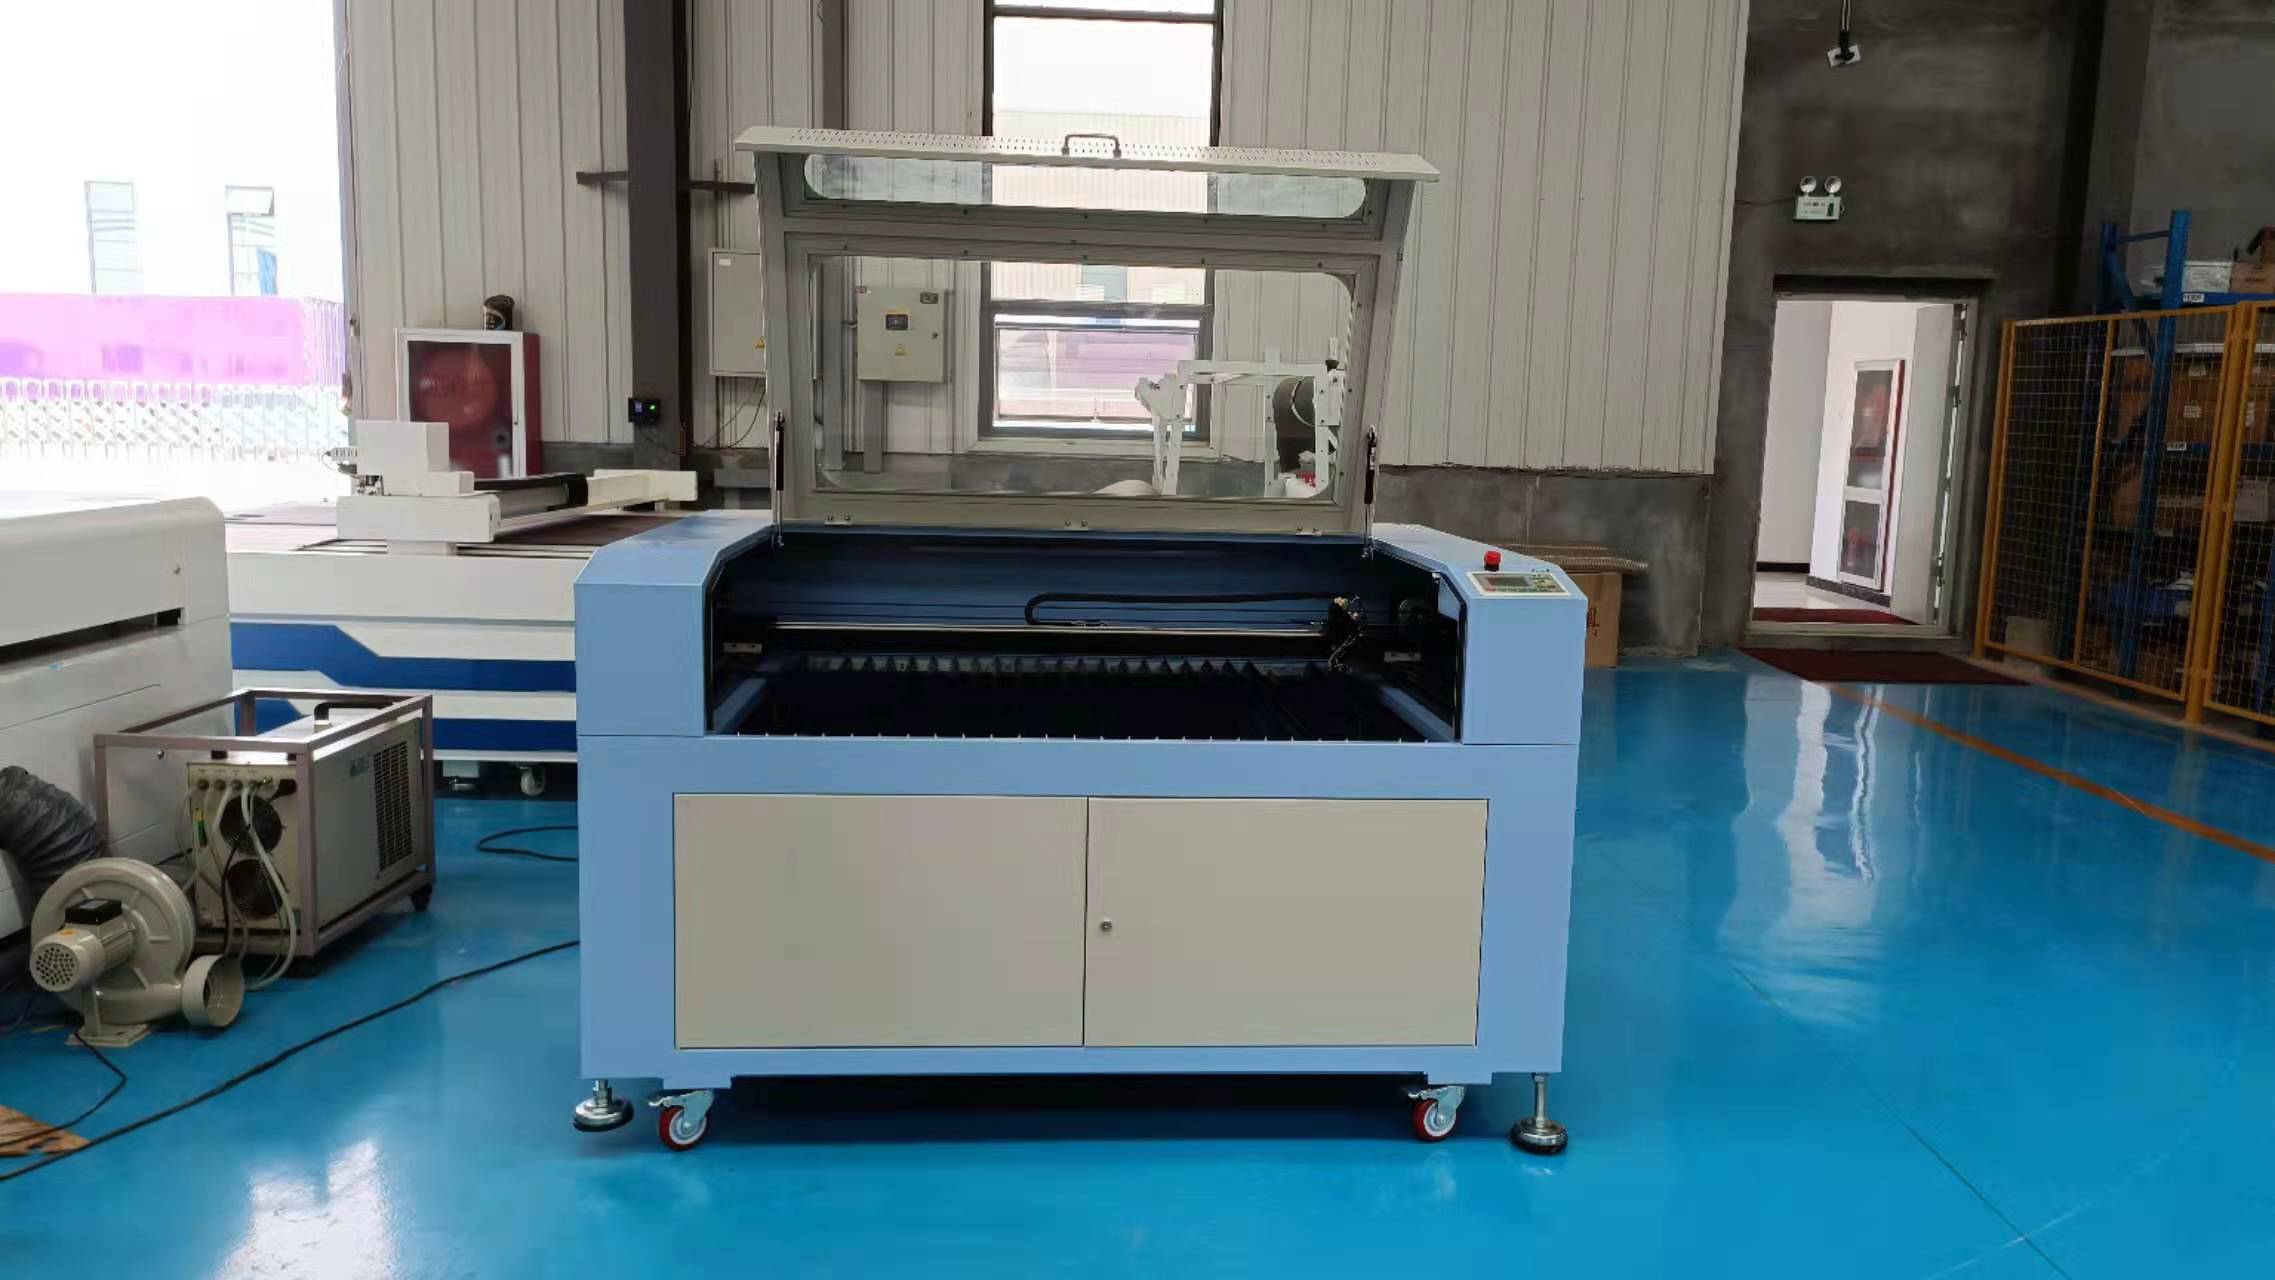 Y1390 CO2 Laser Cutting Engraving Machine for MDF Acrylic Wood